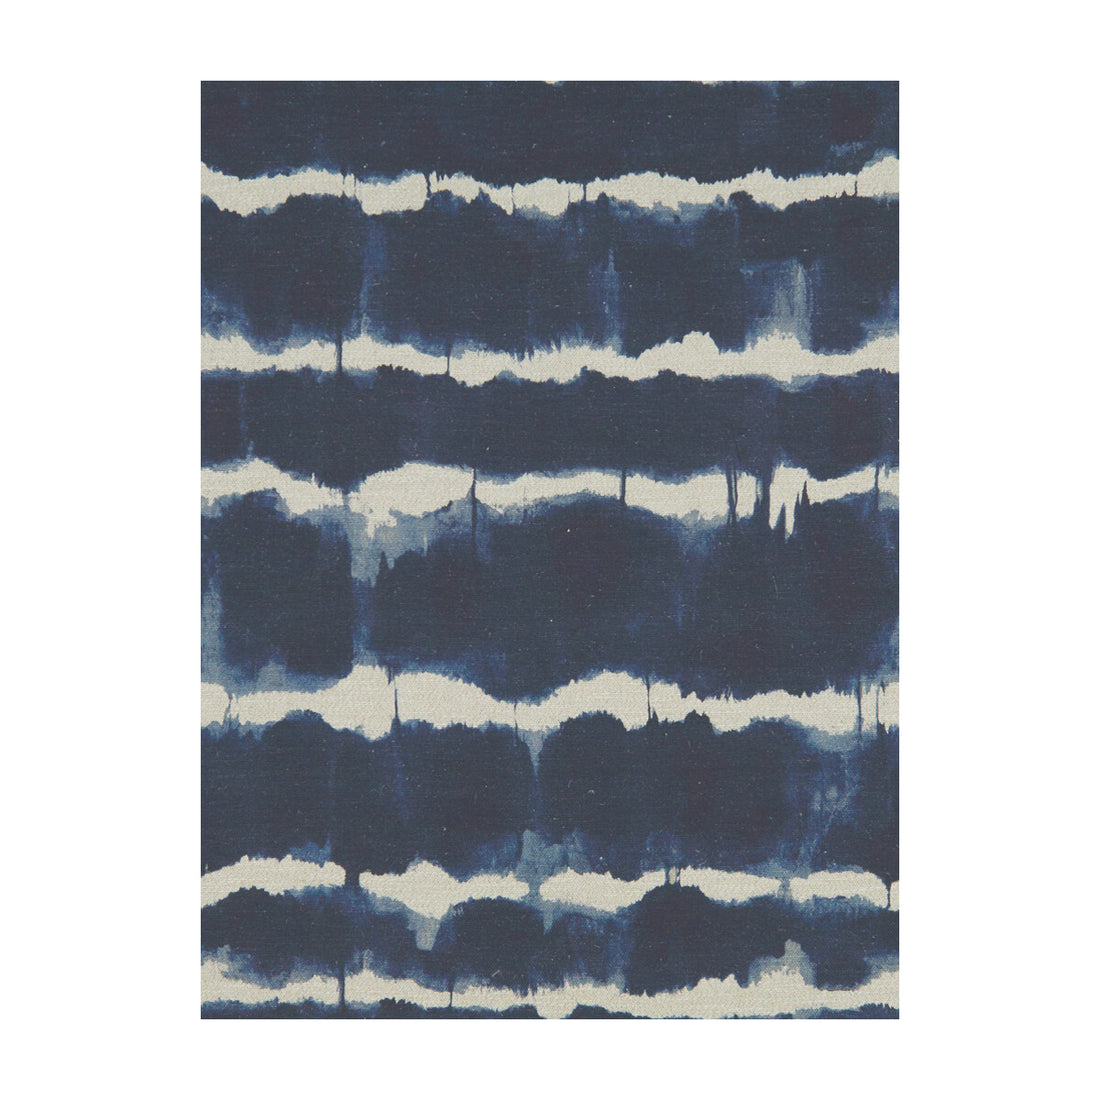 Baturi fabric in indigo color - pattern BATURI.516.0 - by Kravet Couture in the Linherr Hollingsworth Boheme collection